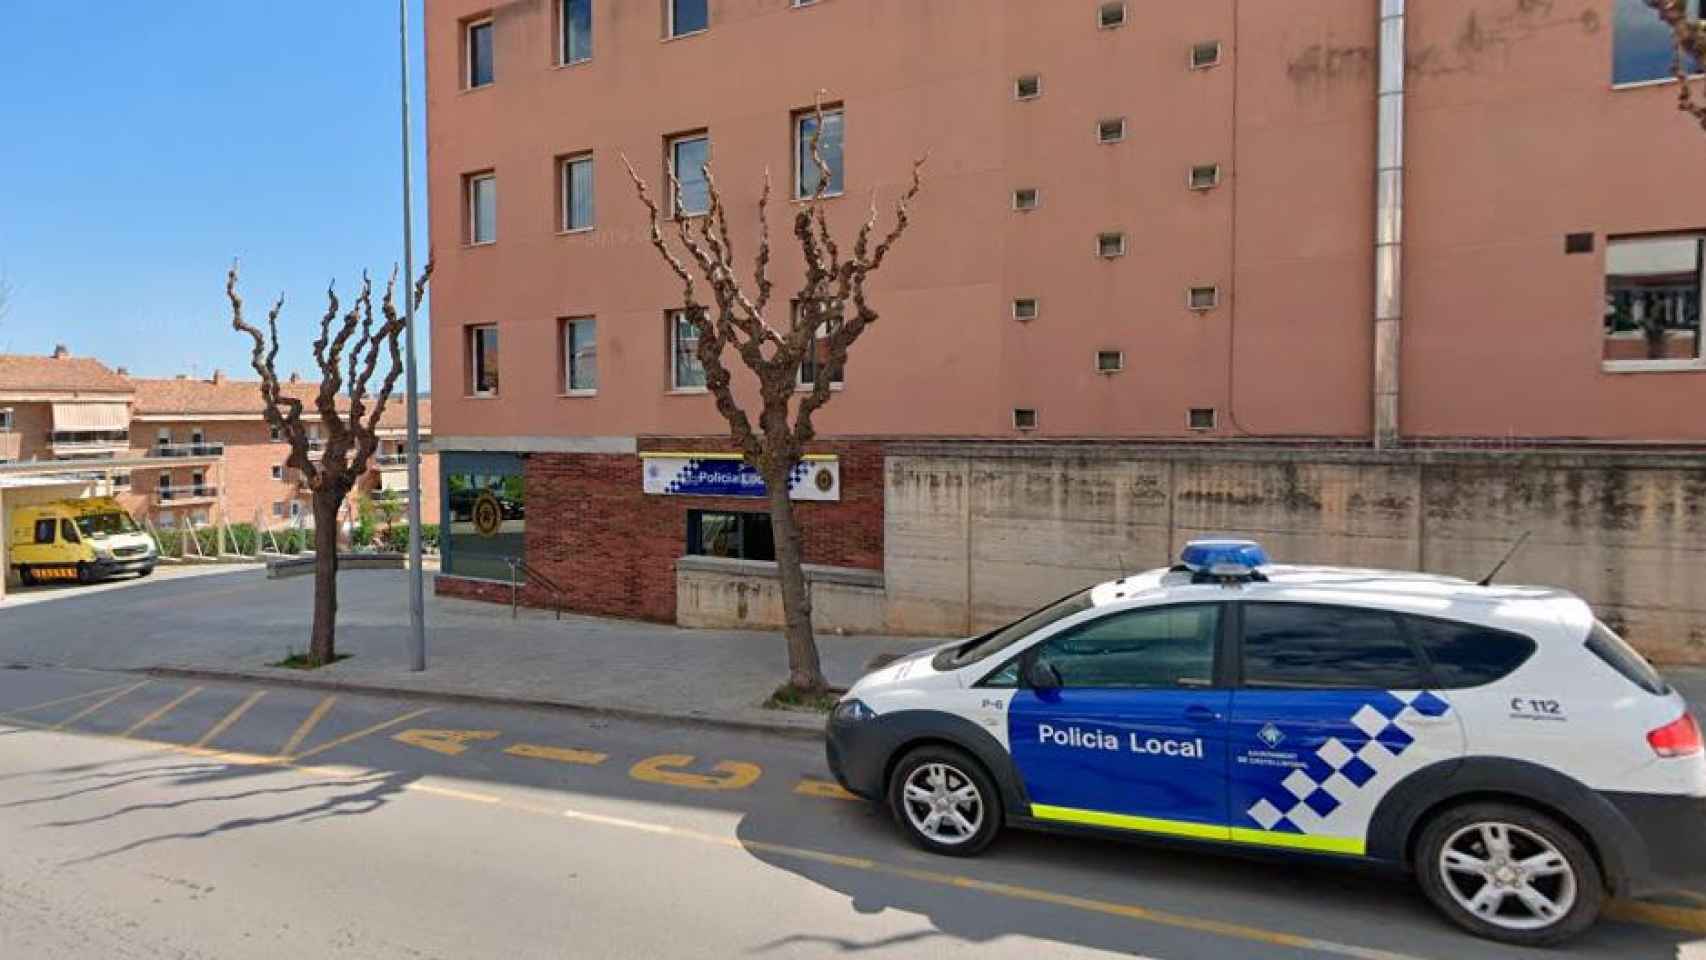 Policía Local de Castellbisbal, donde un hombre confesó haber matado a su esposa en Halloween